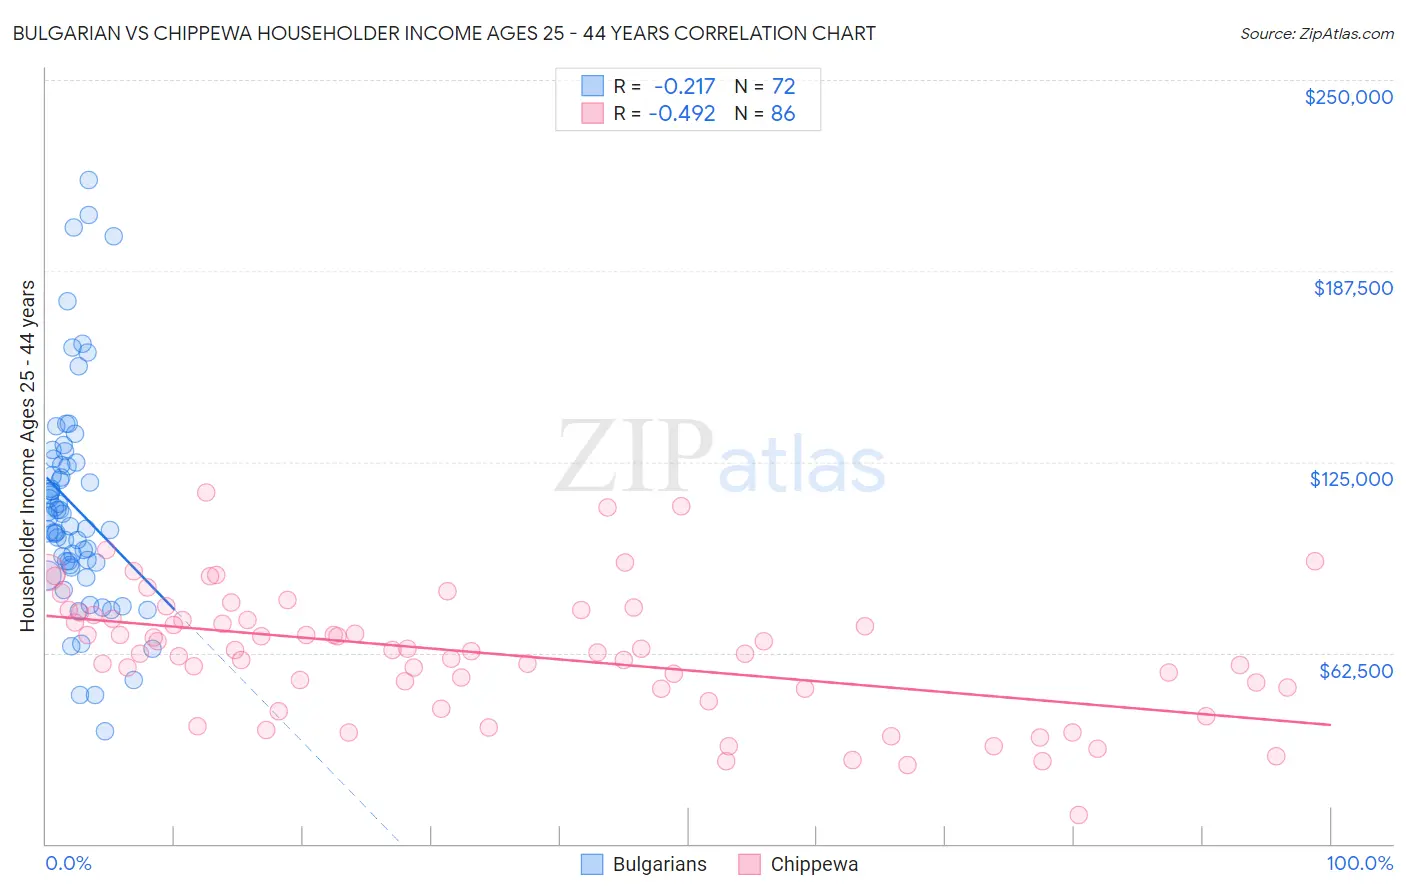 Bulgarian vs Chippewa Householder Income Ages 25 - 44 years